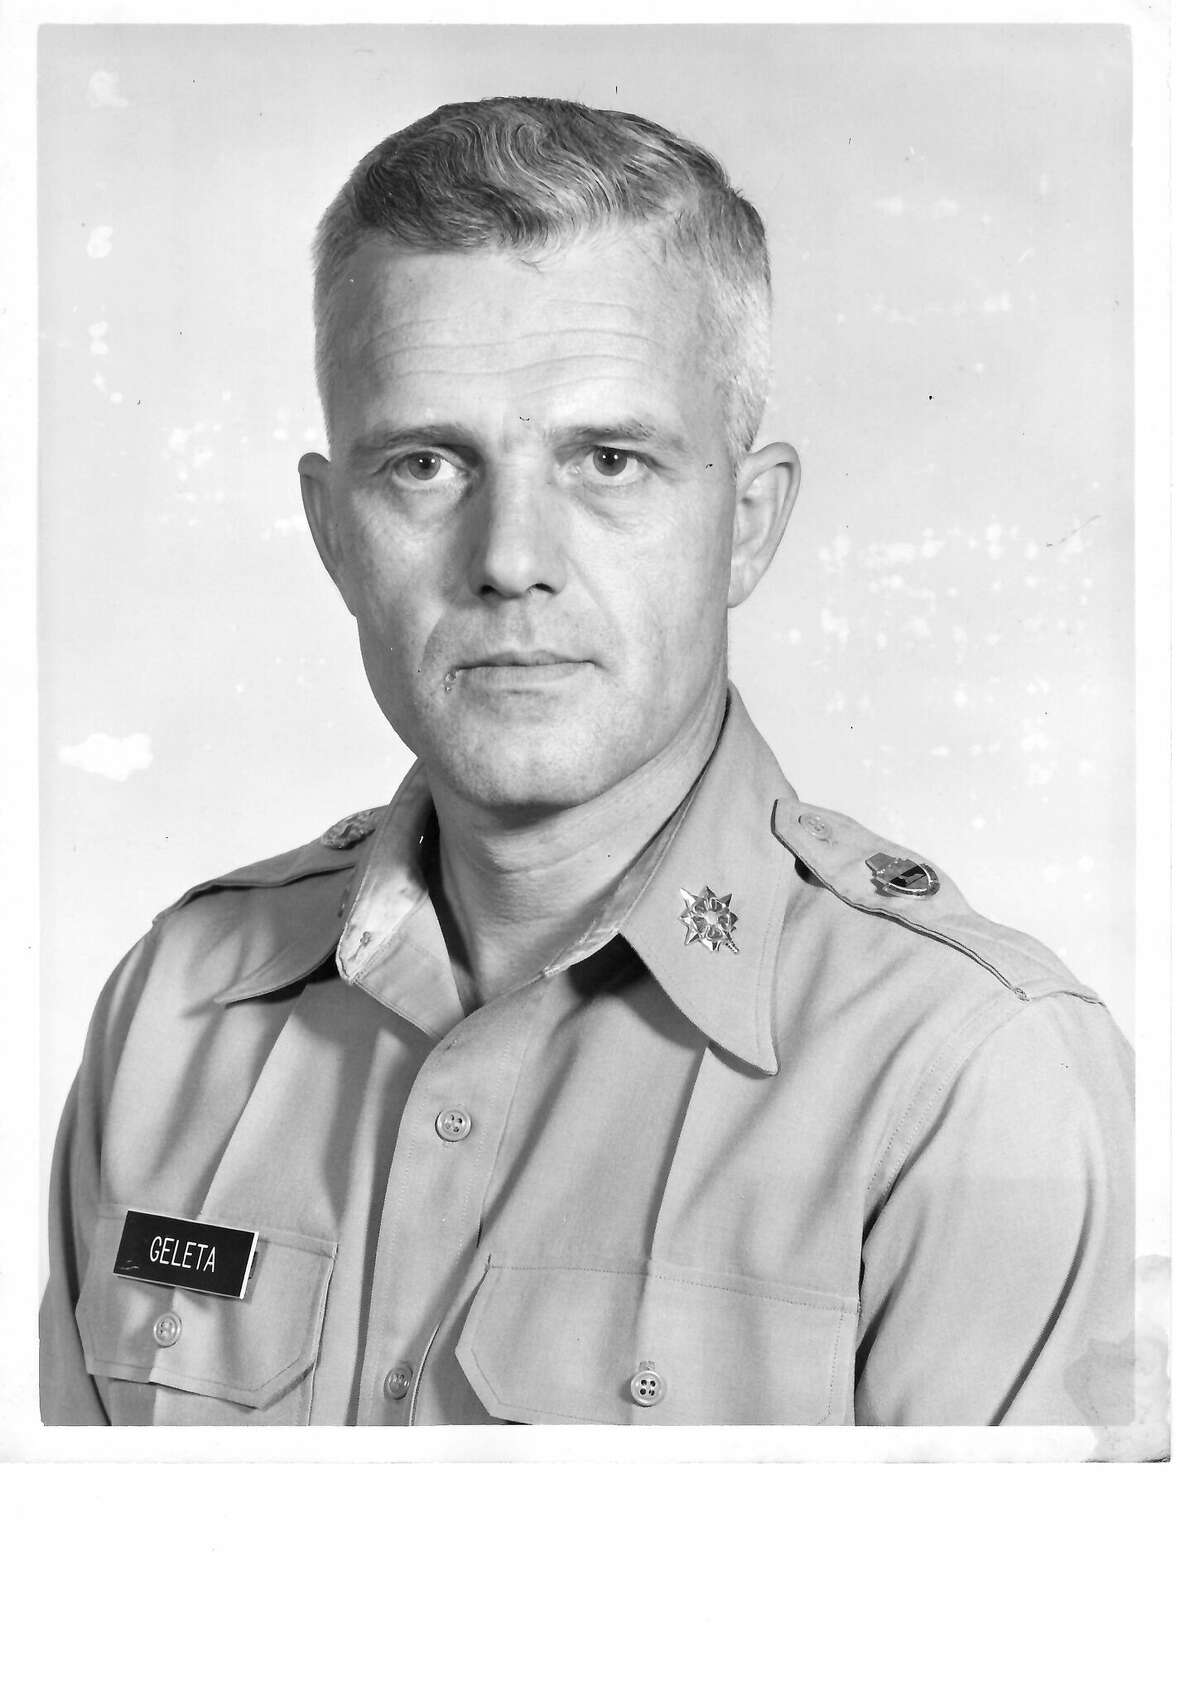 Maj. Leo A. Geleta, Army retirement photo, 1965 (Provided: Leo Geleta)